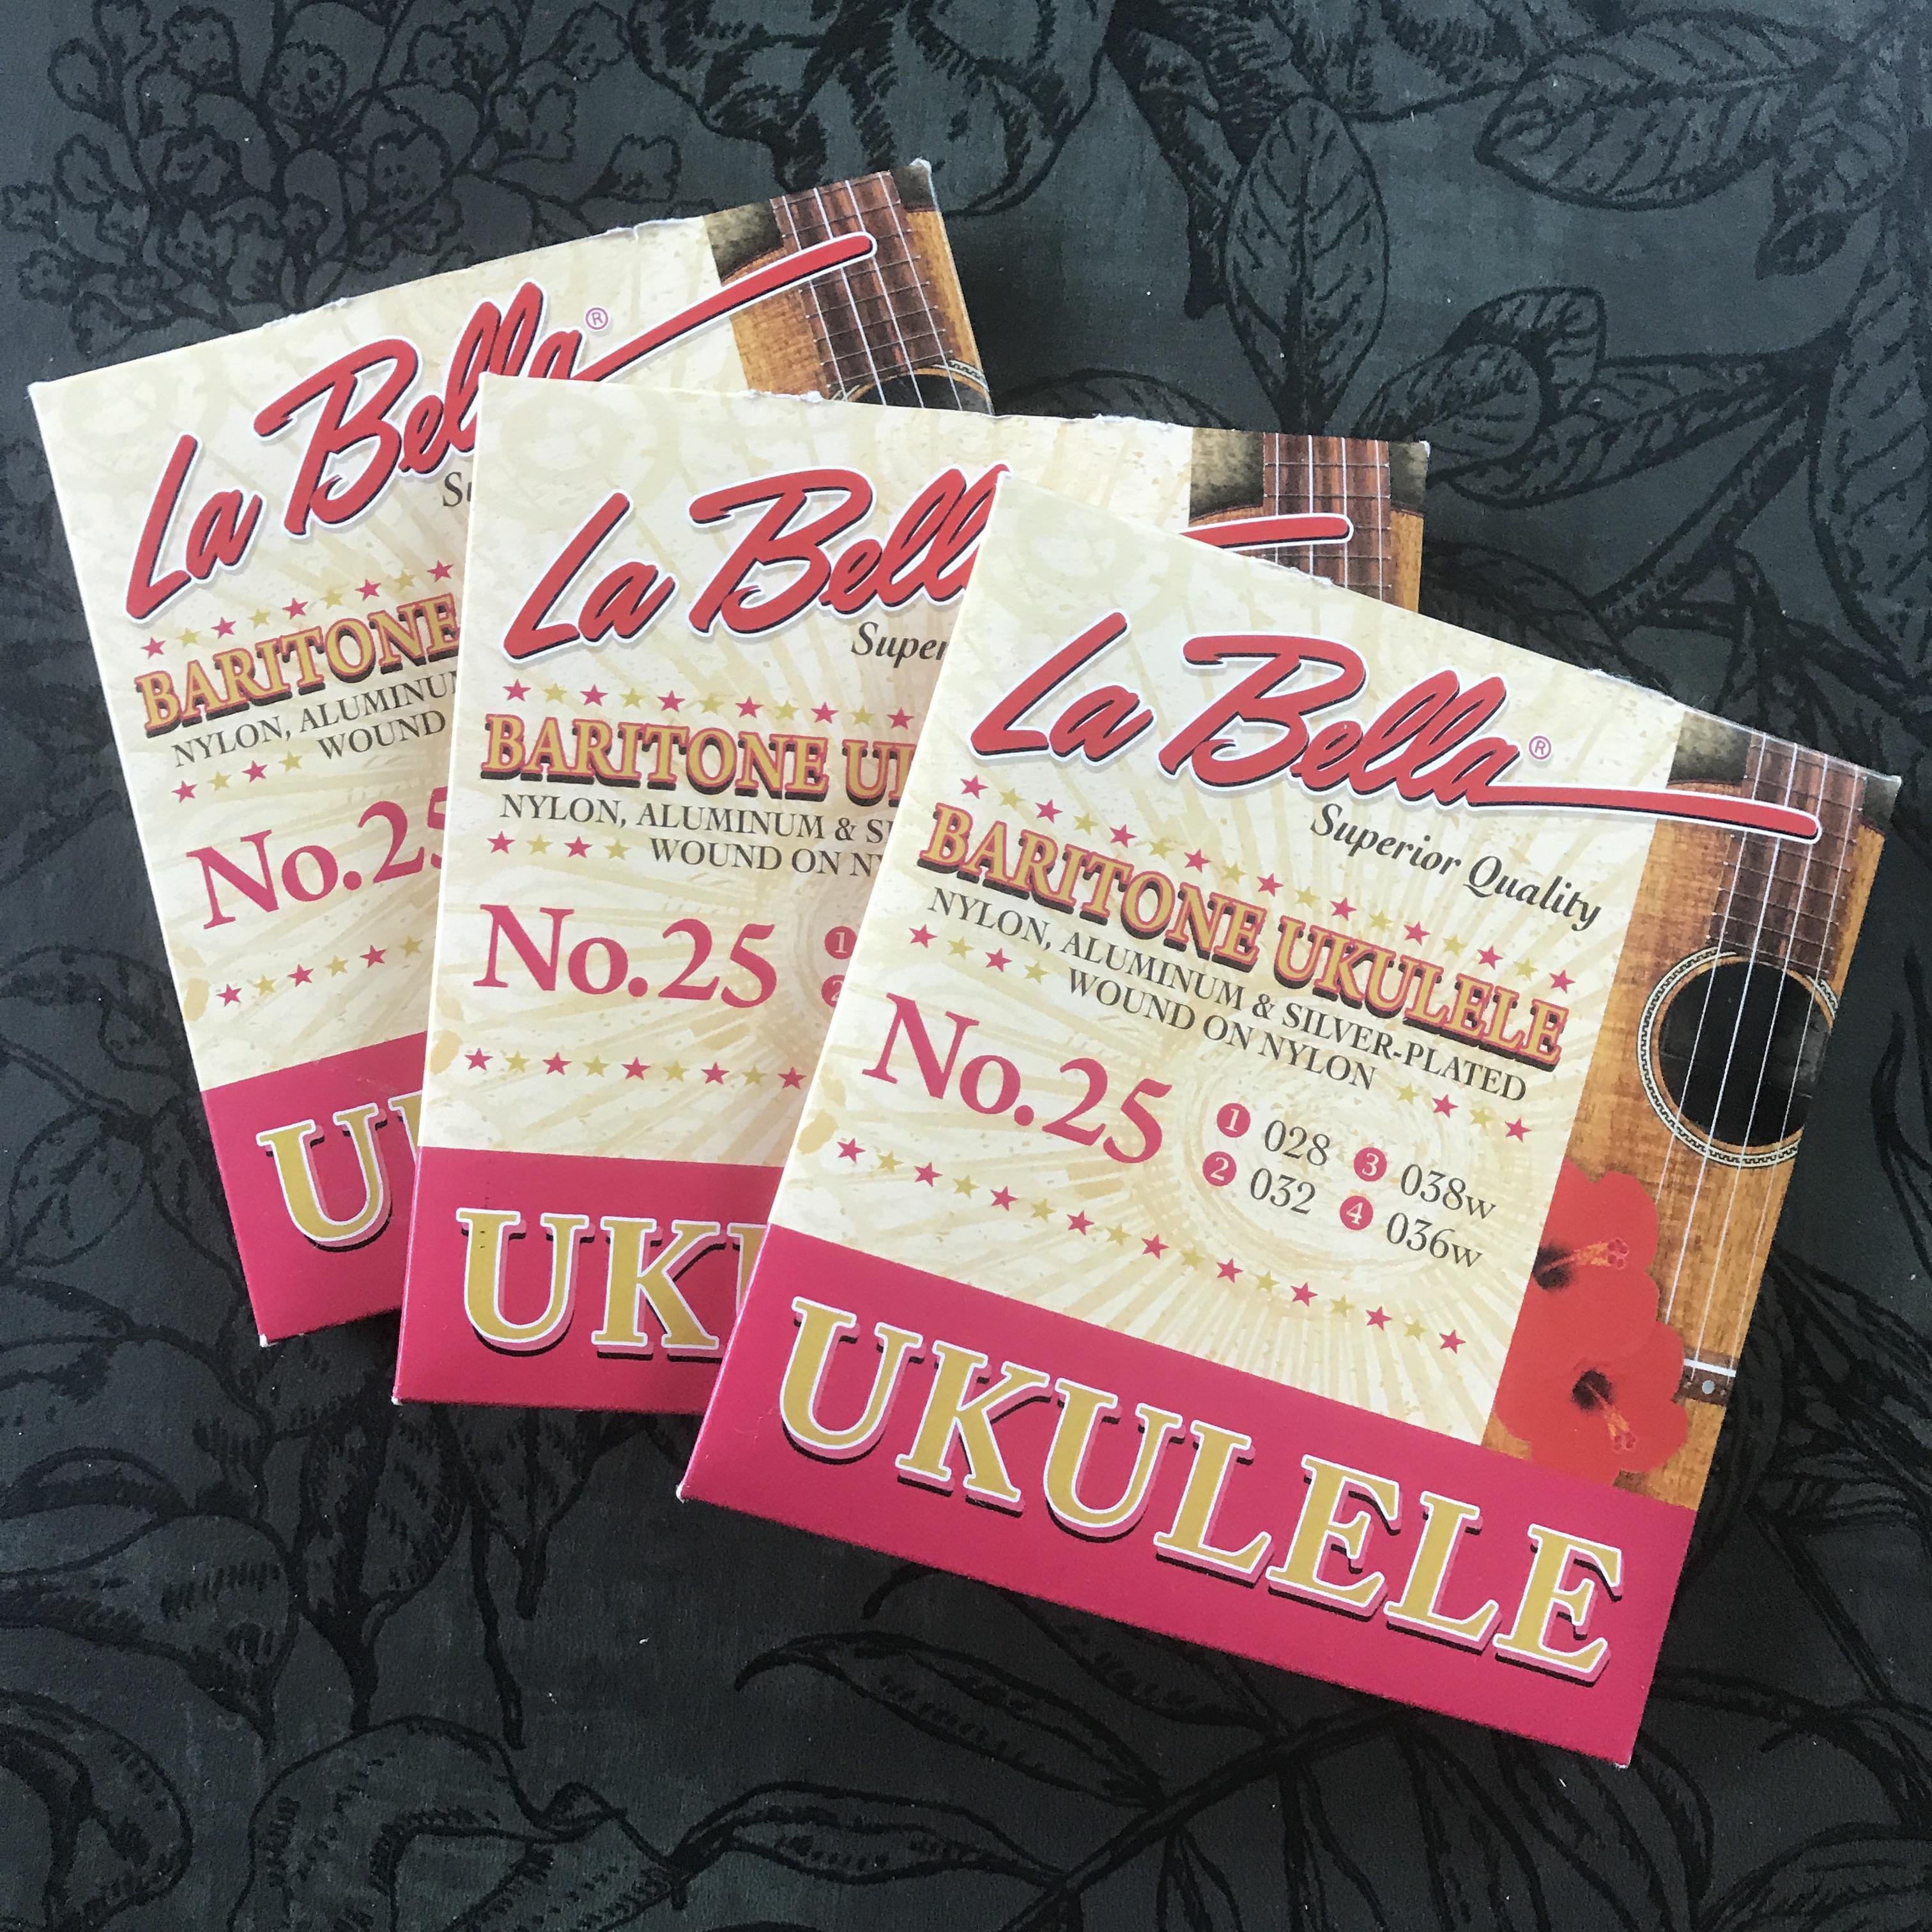 La Bella 25 - Bariton ukulele